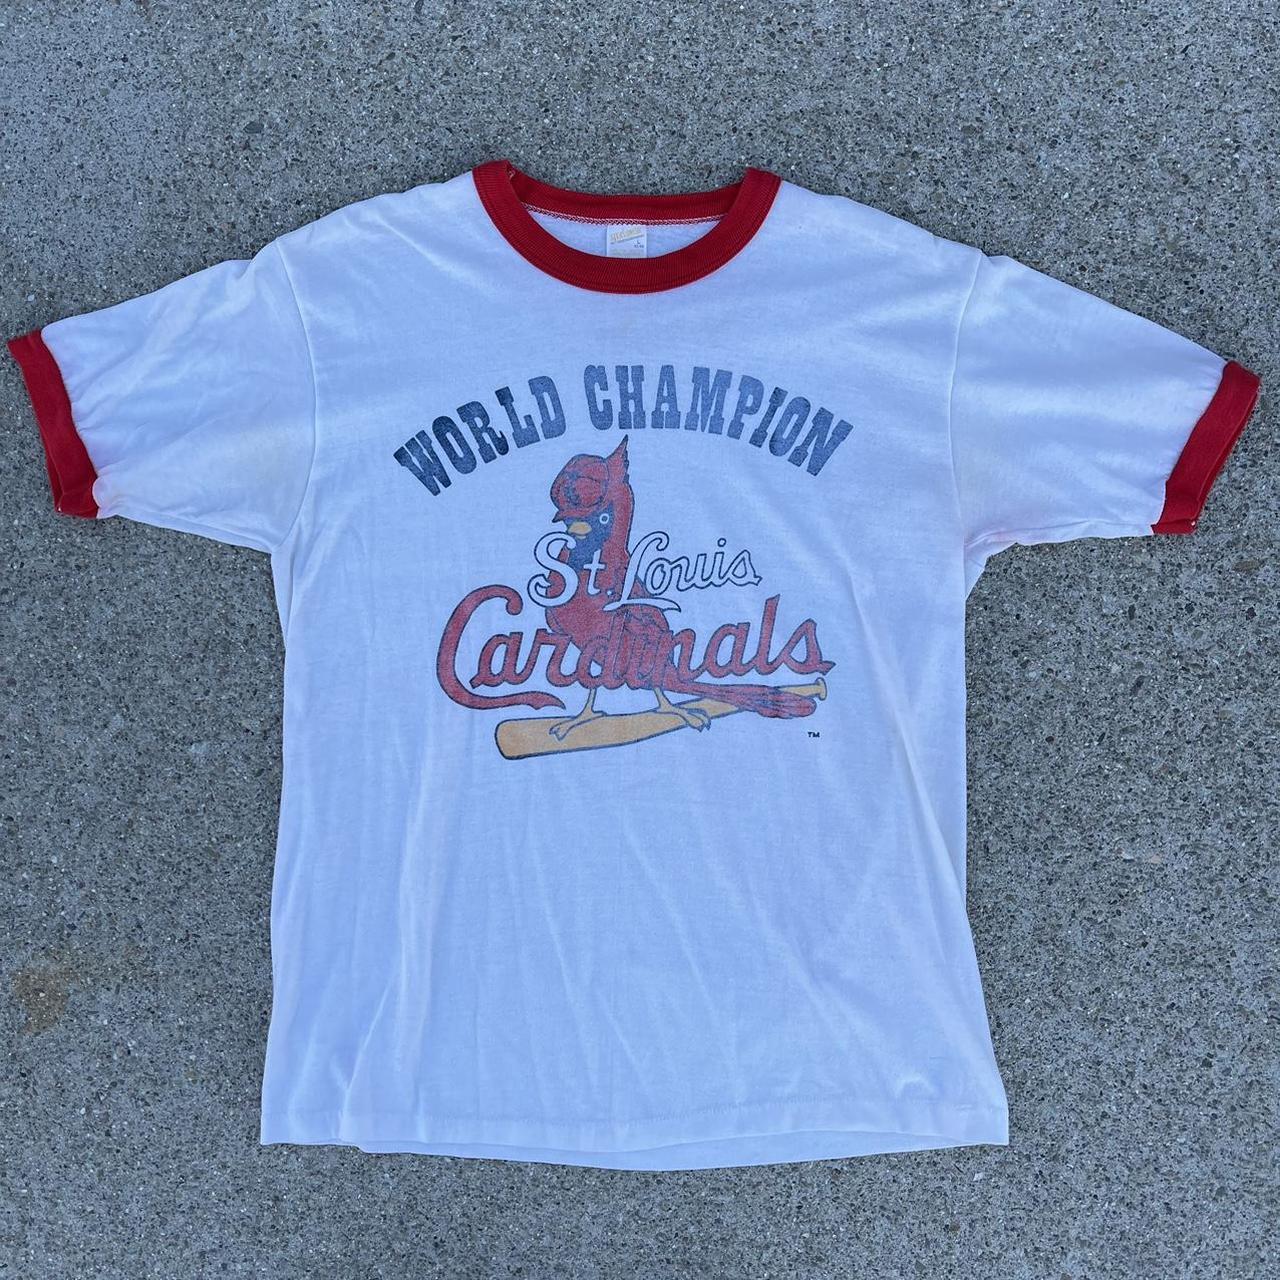 Vintage 80s St. Louis Cardinals Ringer Tee., - Single...